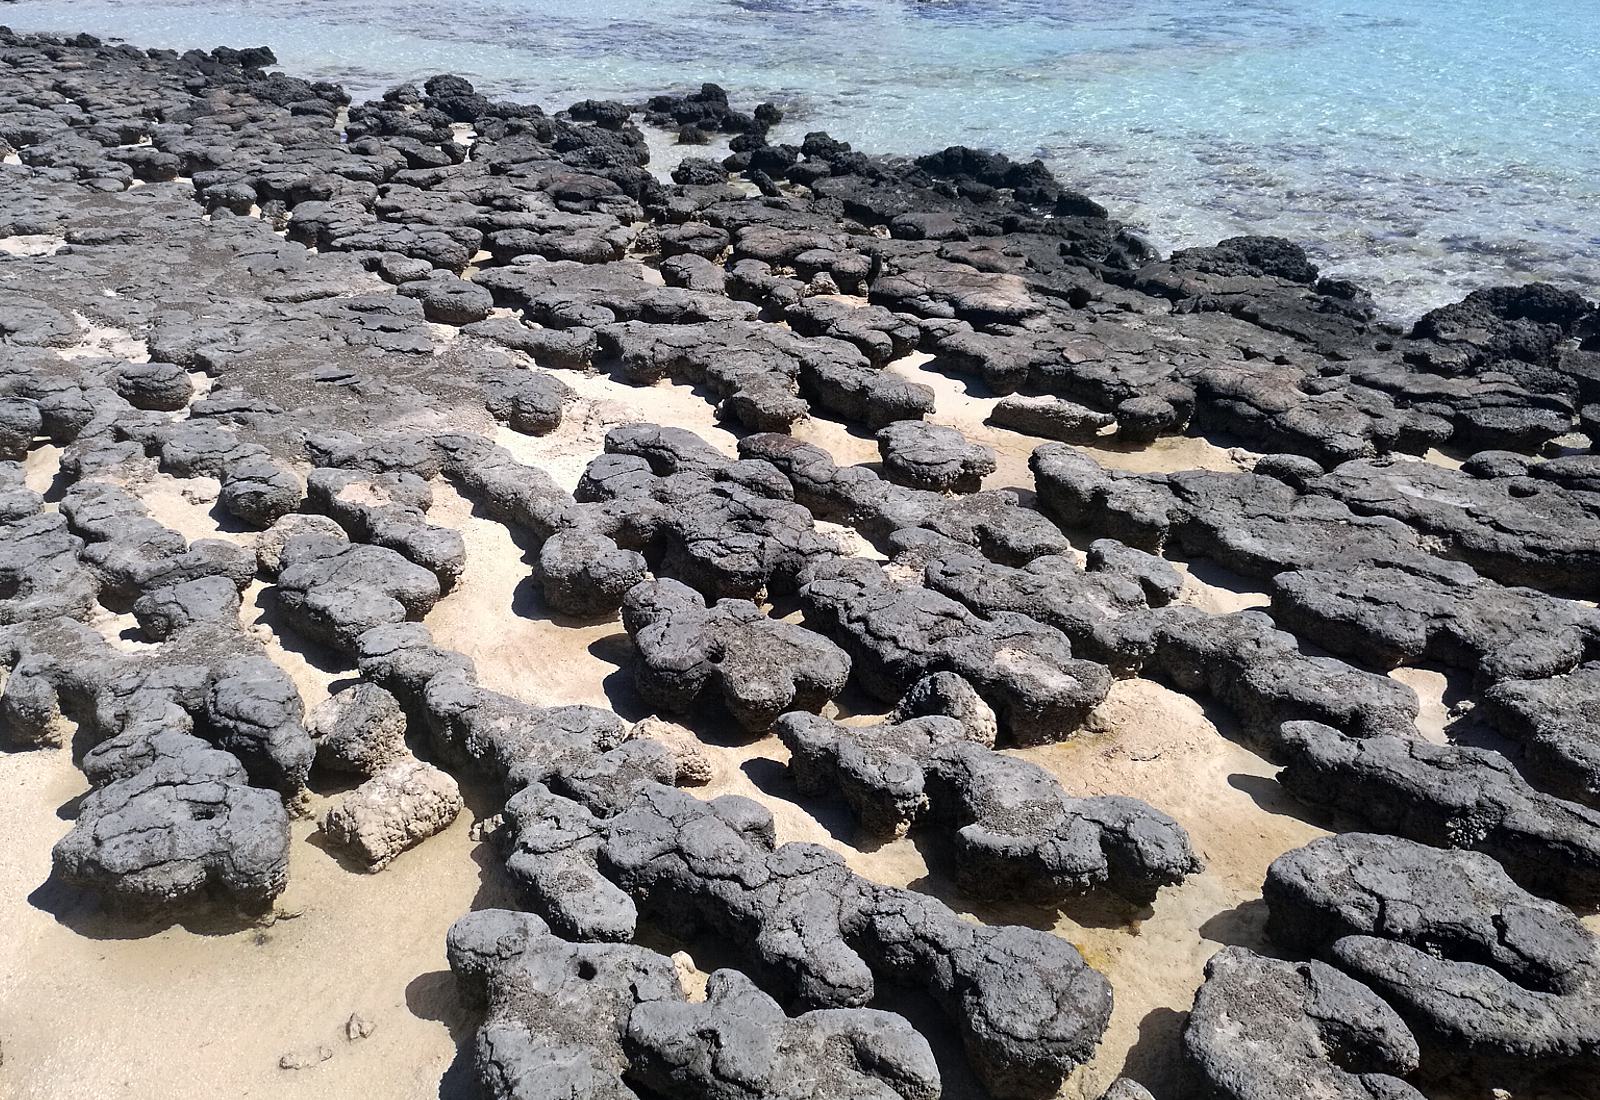 stromatolithen_hamelin_pool